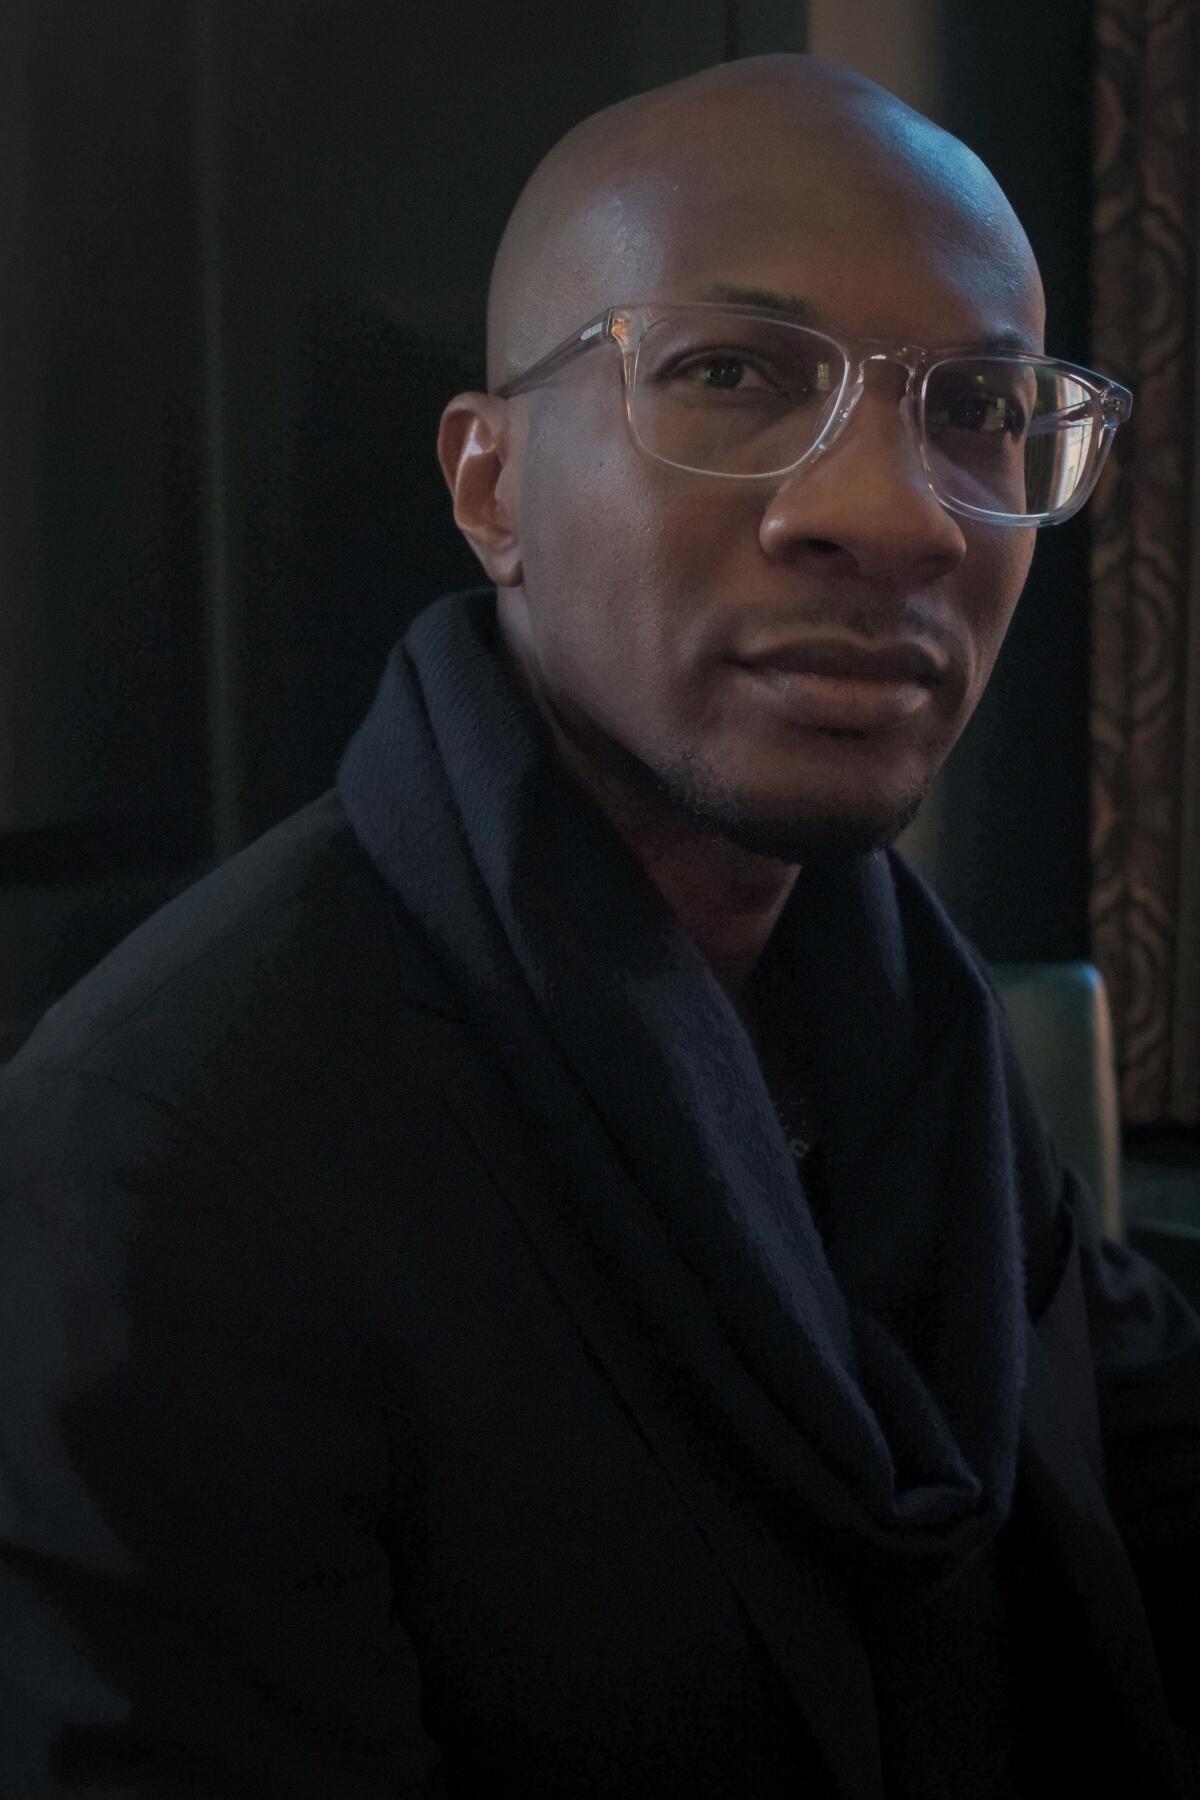 A Black man wearing glasses